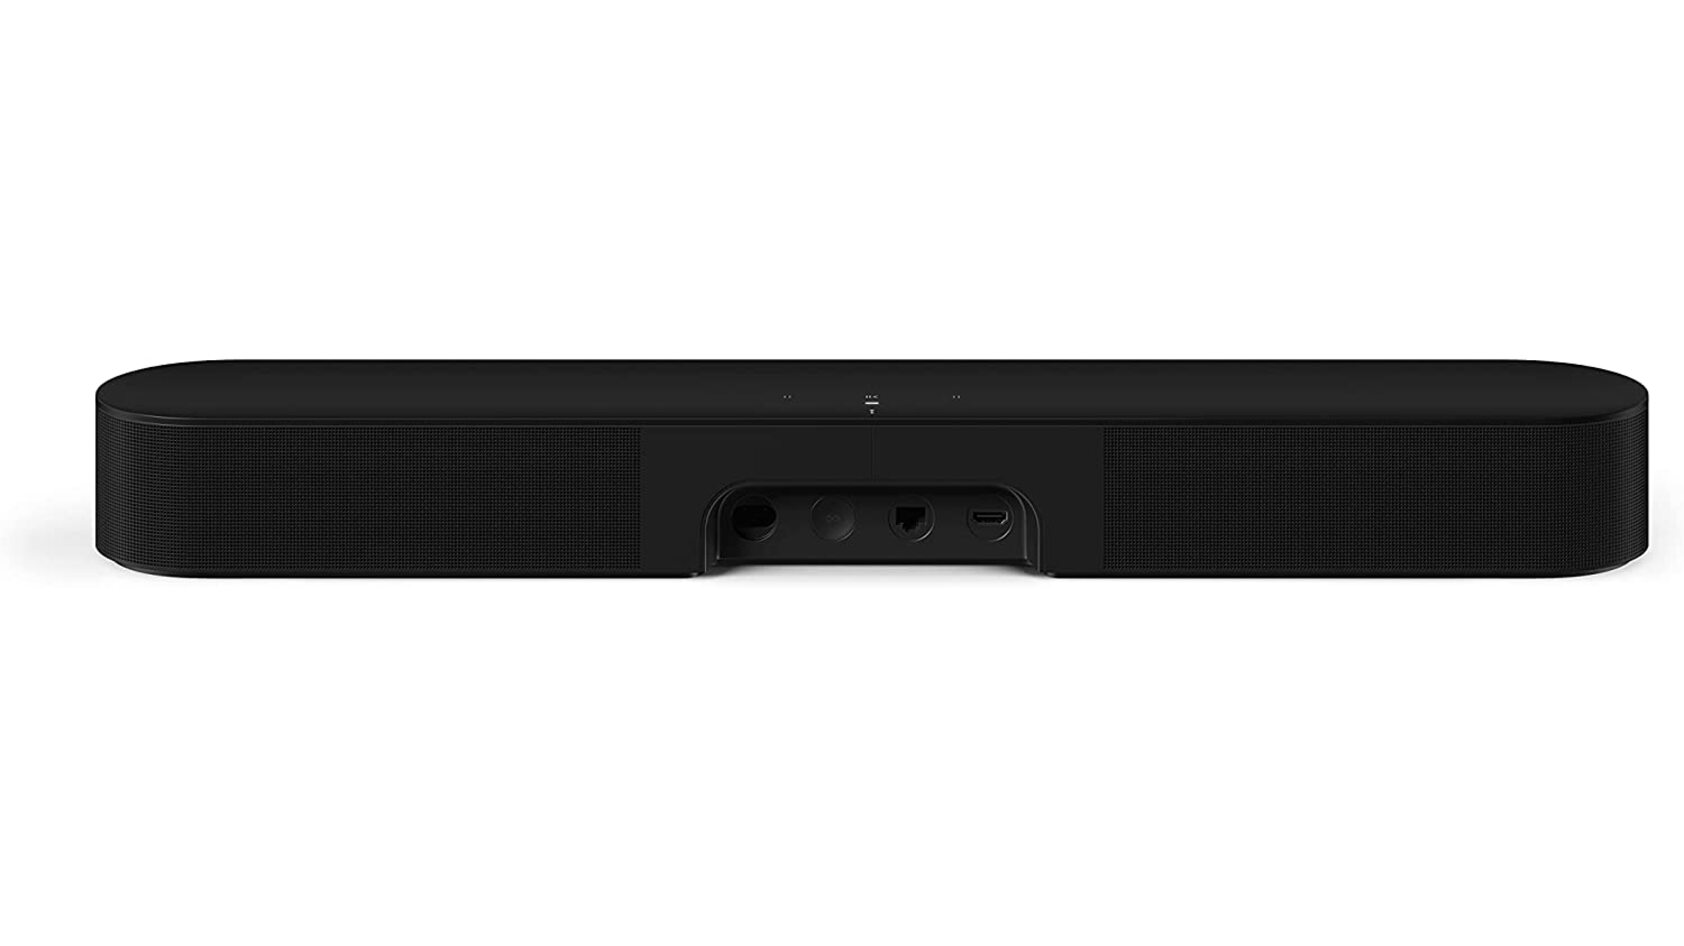 Sonos Beam (Gen 2) ports on the back of the soundbar.